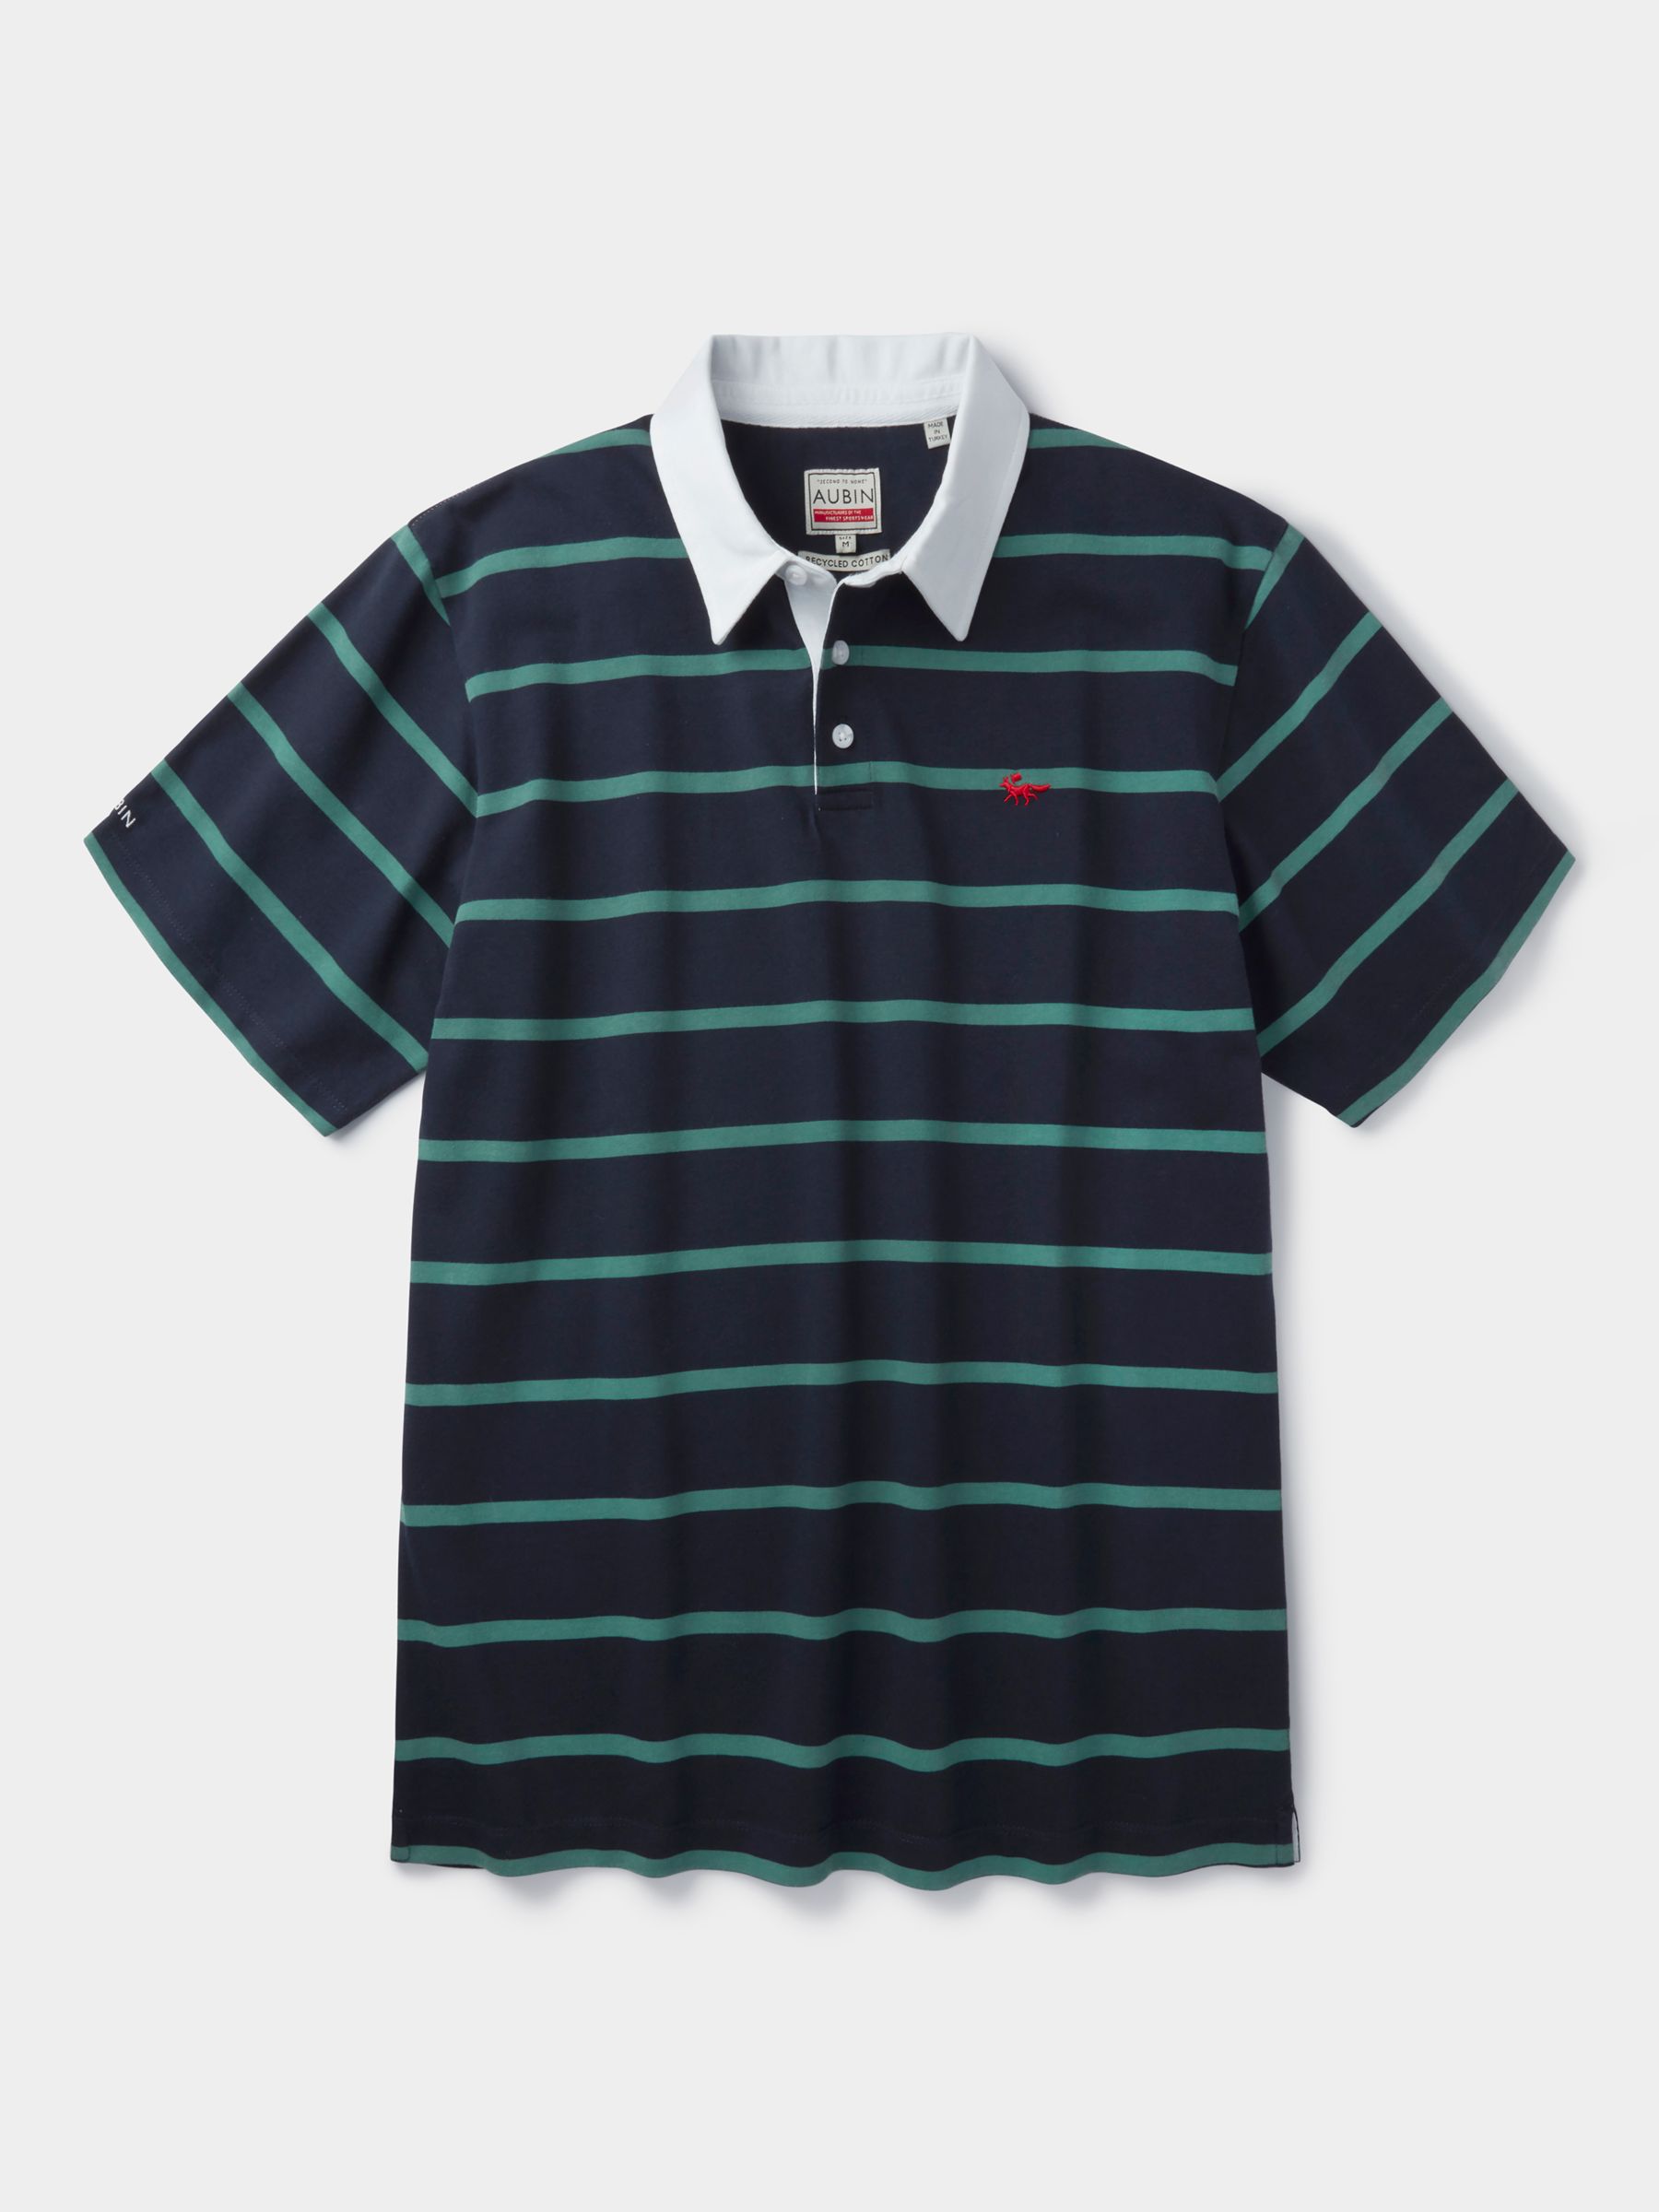 Aubin Conningsby Heavyweight Cotton Polo Shirt, Navy/Green, S